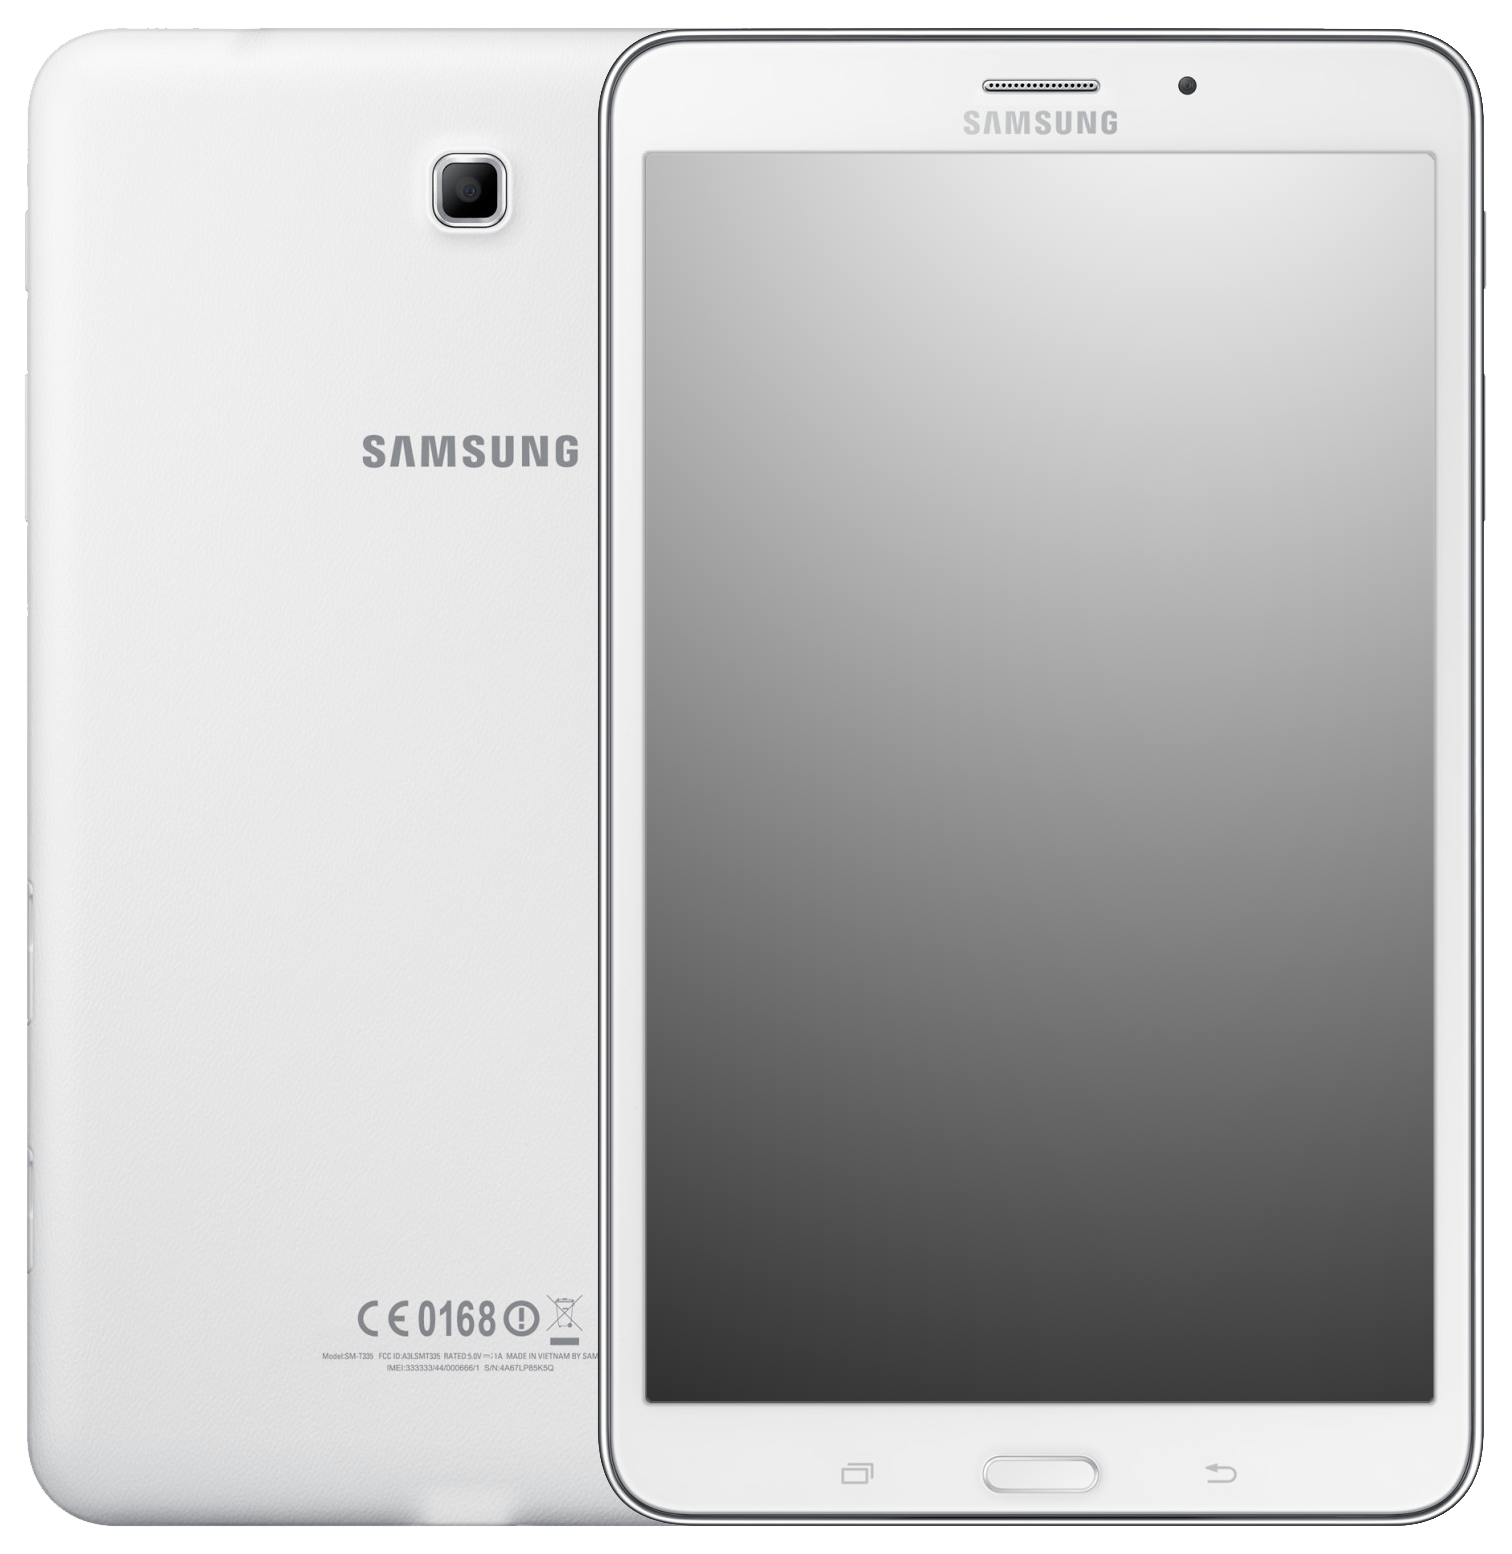 Samsung Galaxy Tab 4 8.0 T335 LTE weiß - Ohne Vertrag